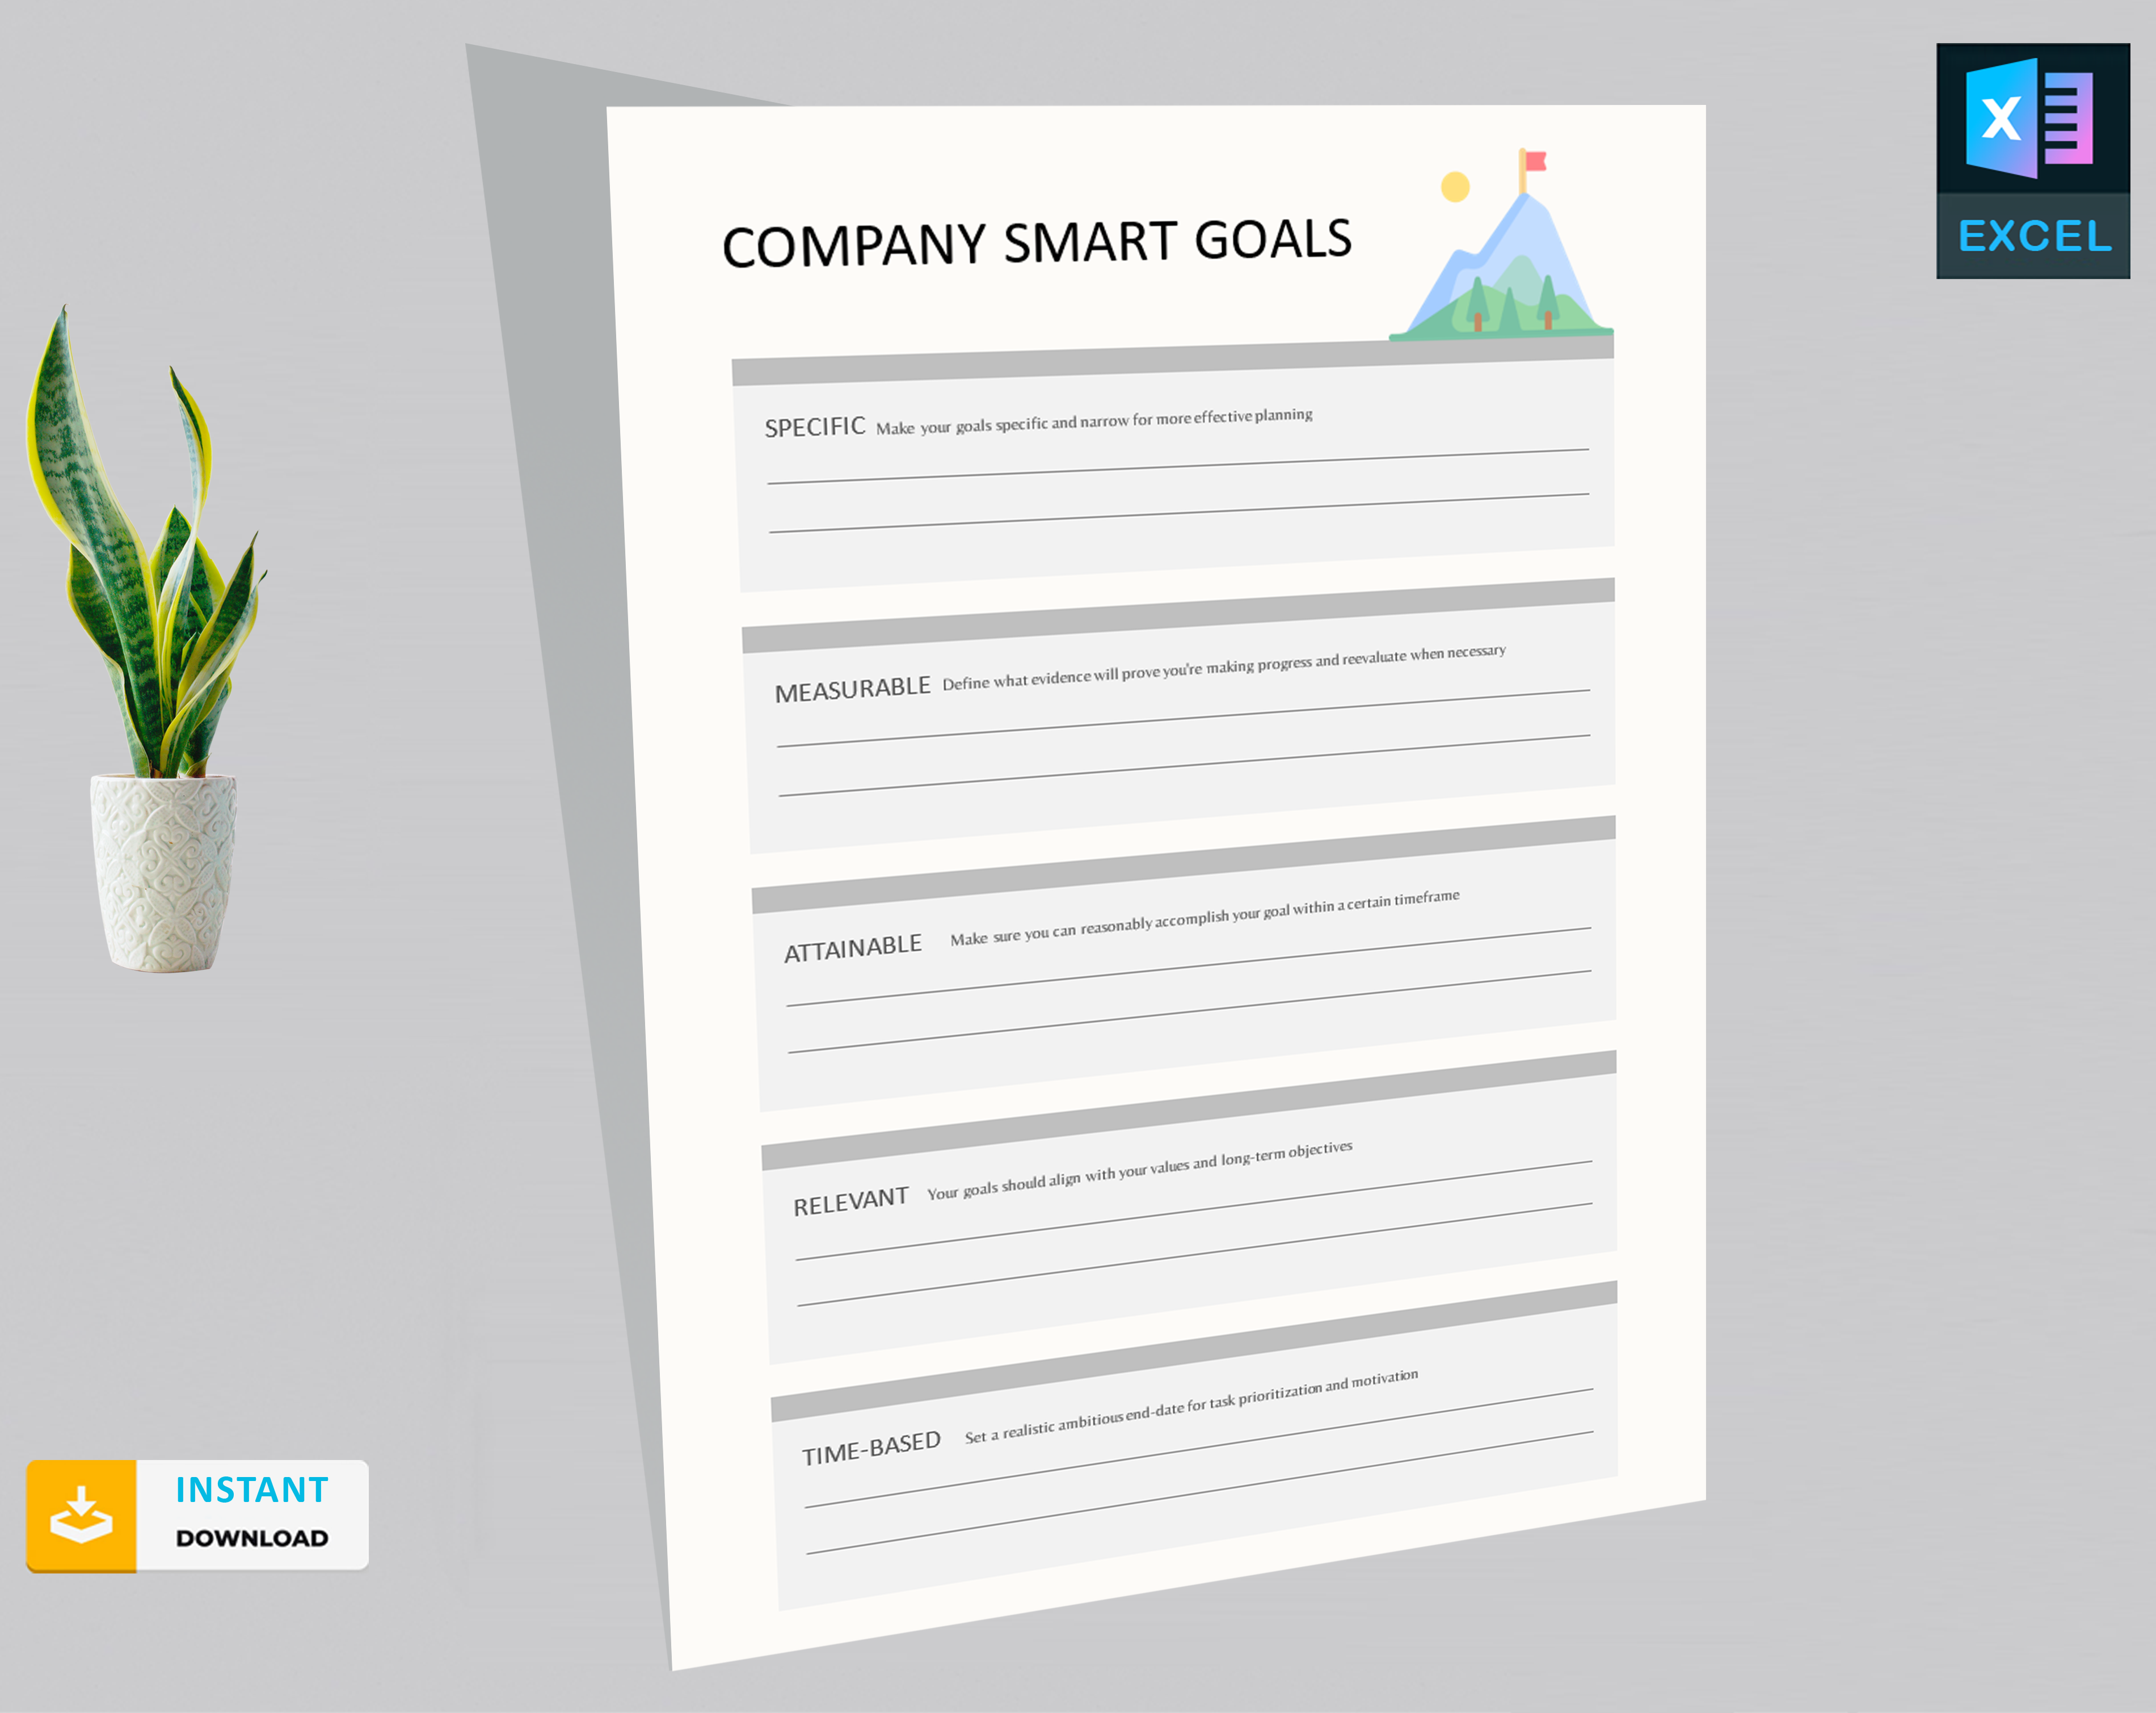 Company Smart Goals Template